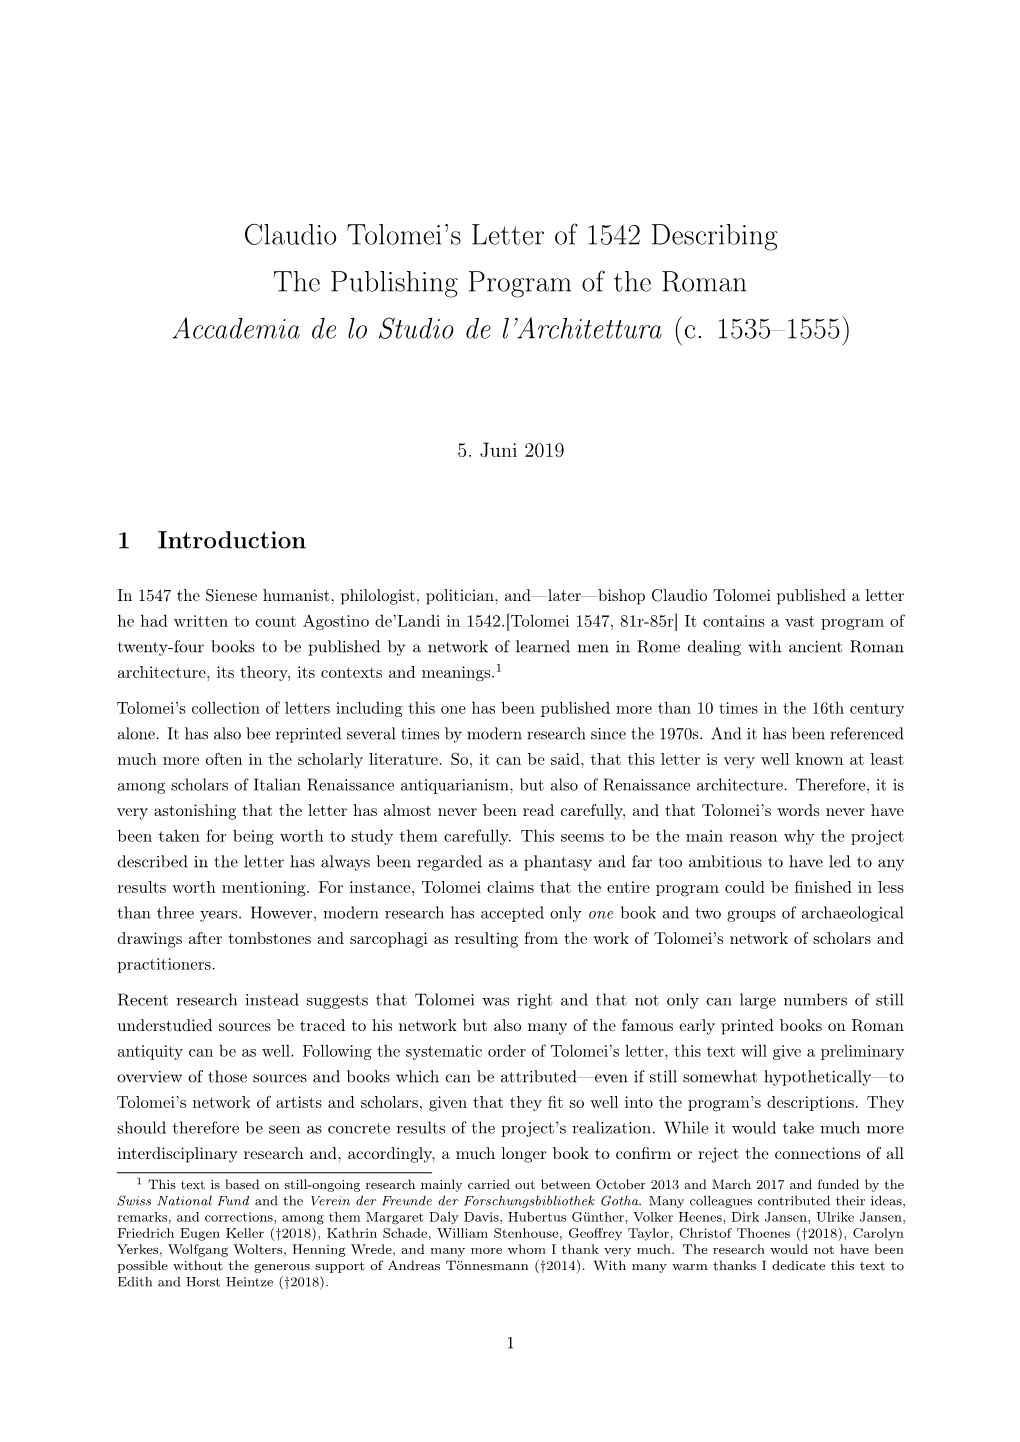 Claudio Tolomei's Letter of 1542 Describing the Publishing Program